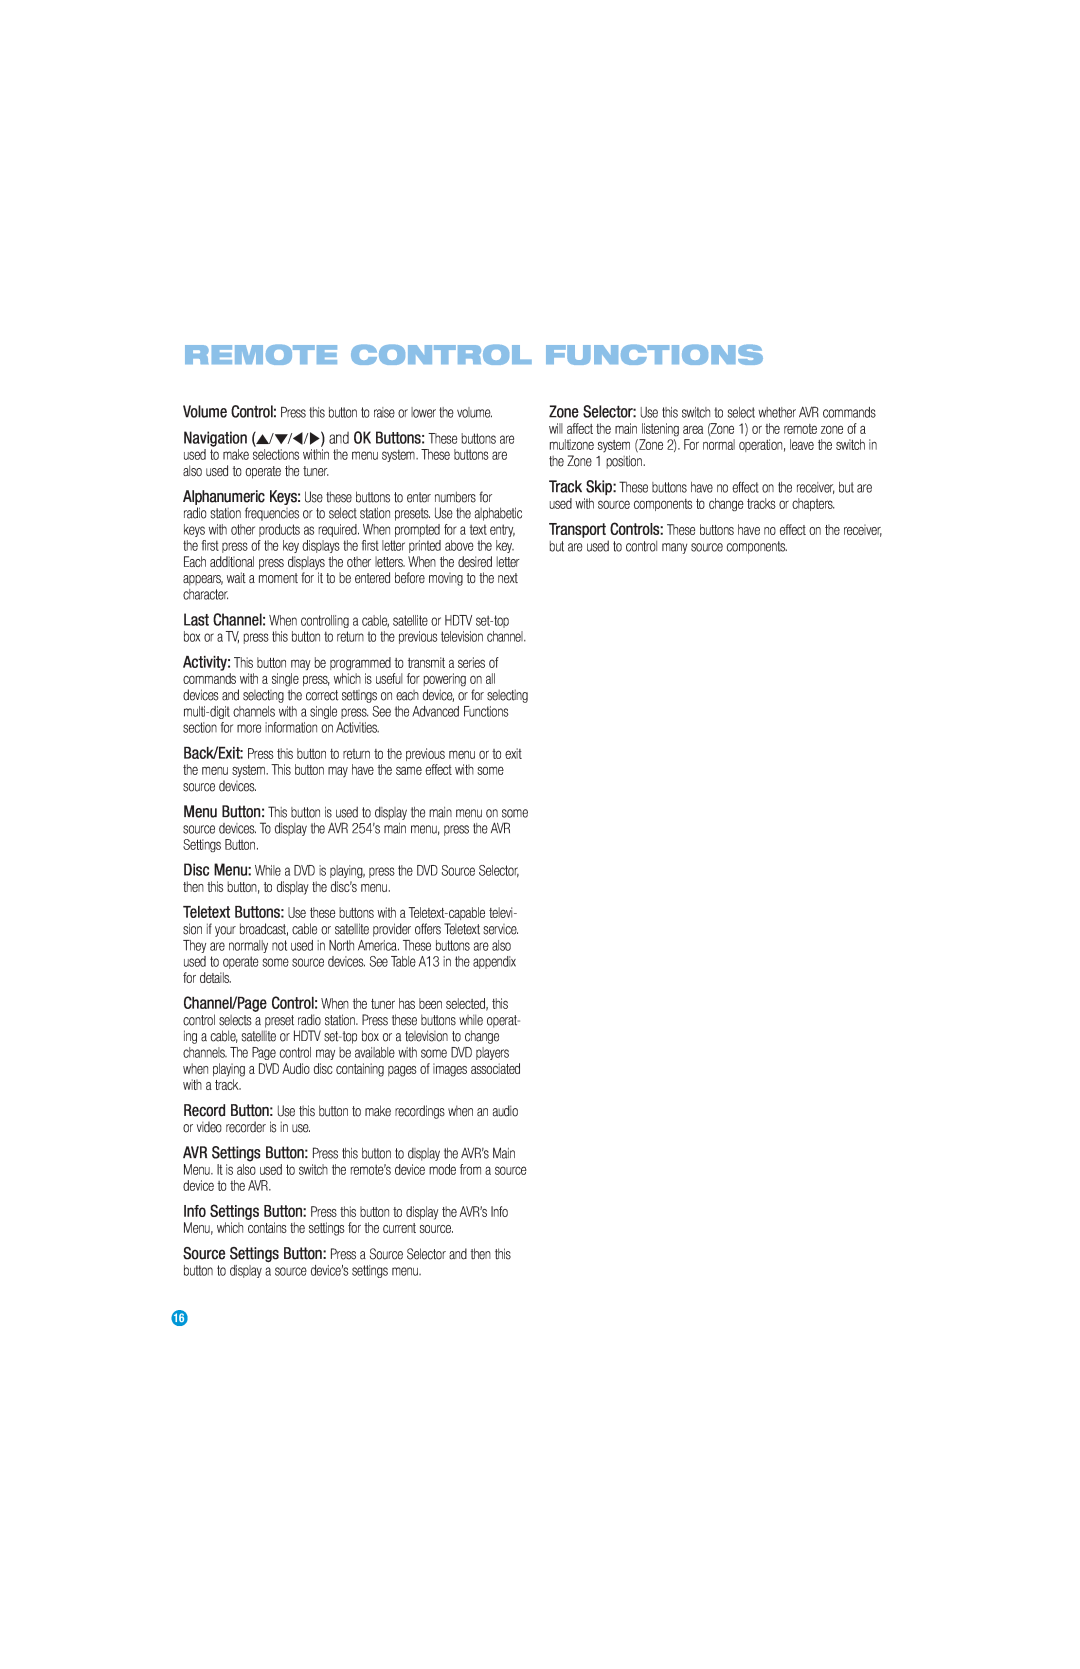 Harman-Kardon AVR 254 owner manual Remote Control Functions 